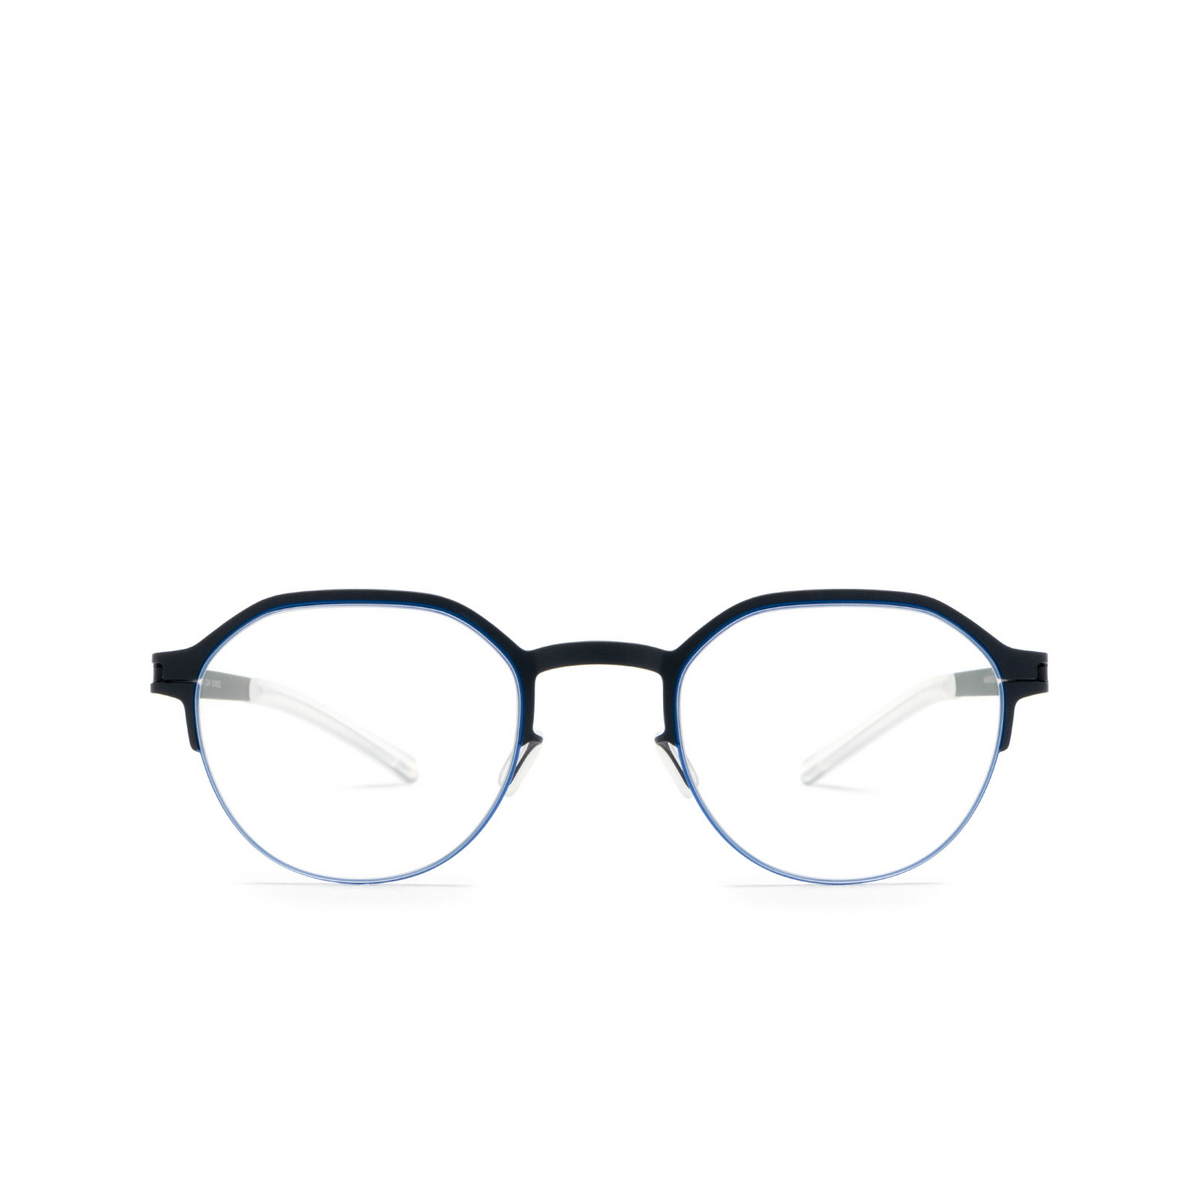 Mykita DORIAN Eyeglasses 514 Indigo/Yale Blue - front view